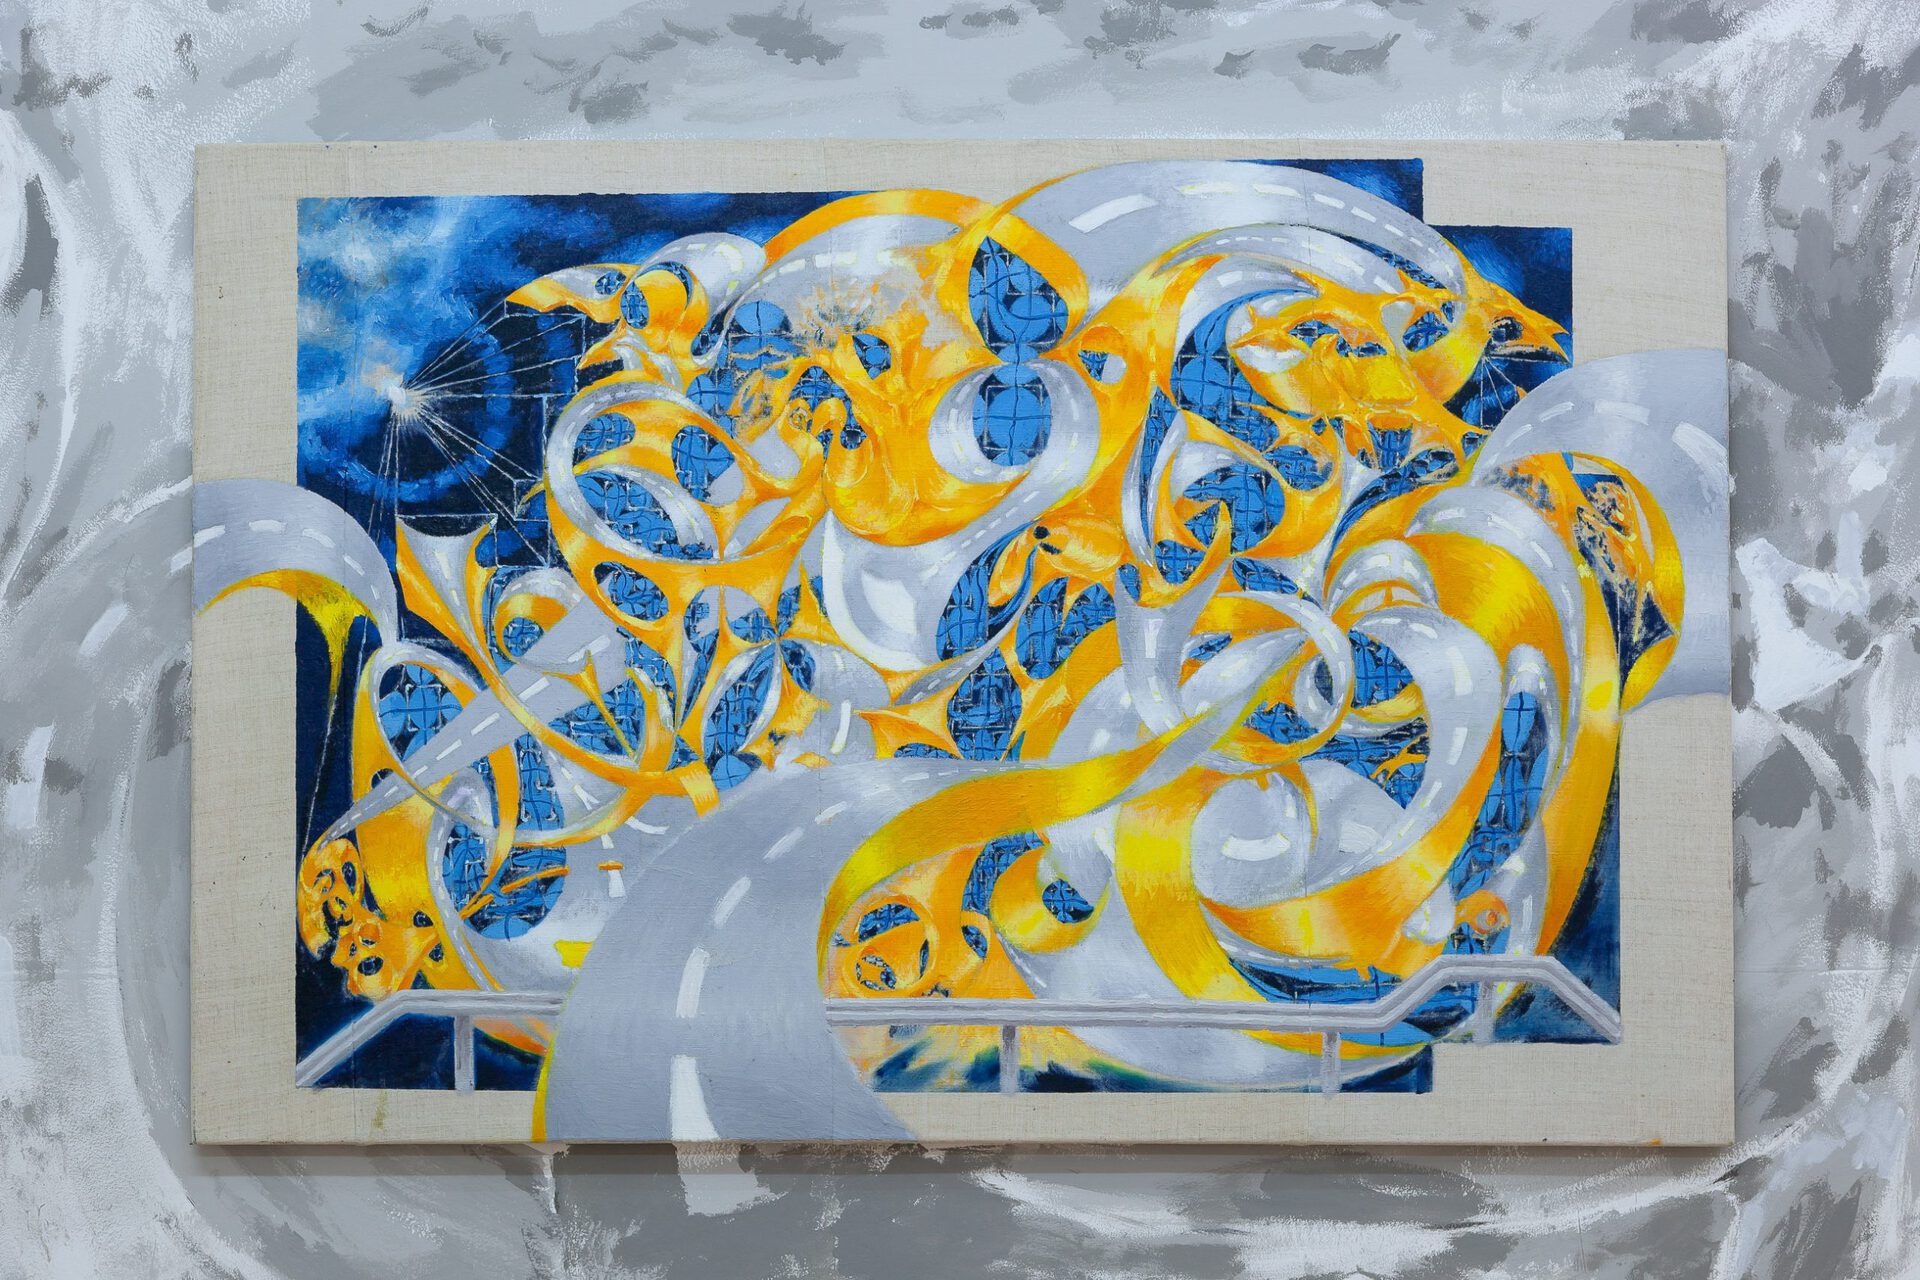 Asfinag/jake the dog, 135 x 88 cm, oil on canvas, 2020